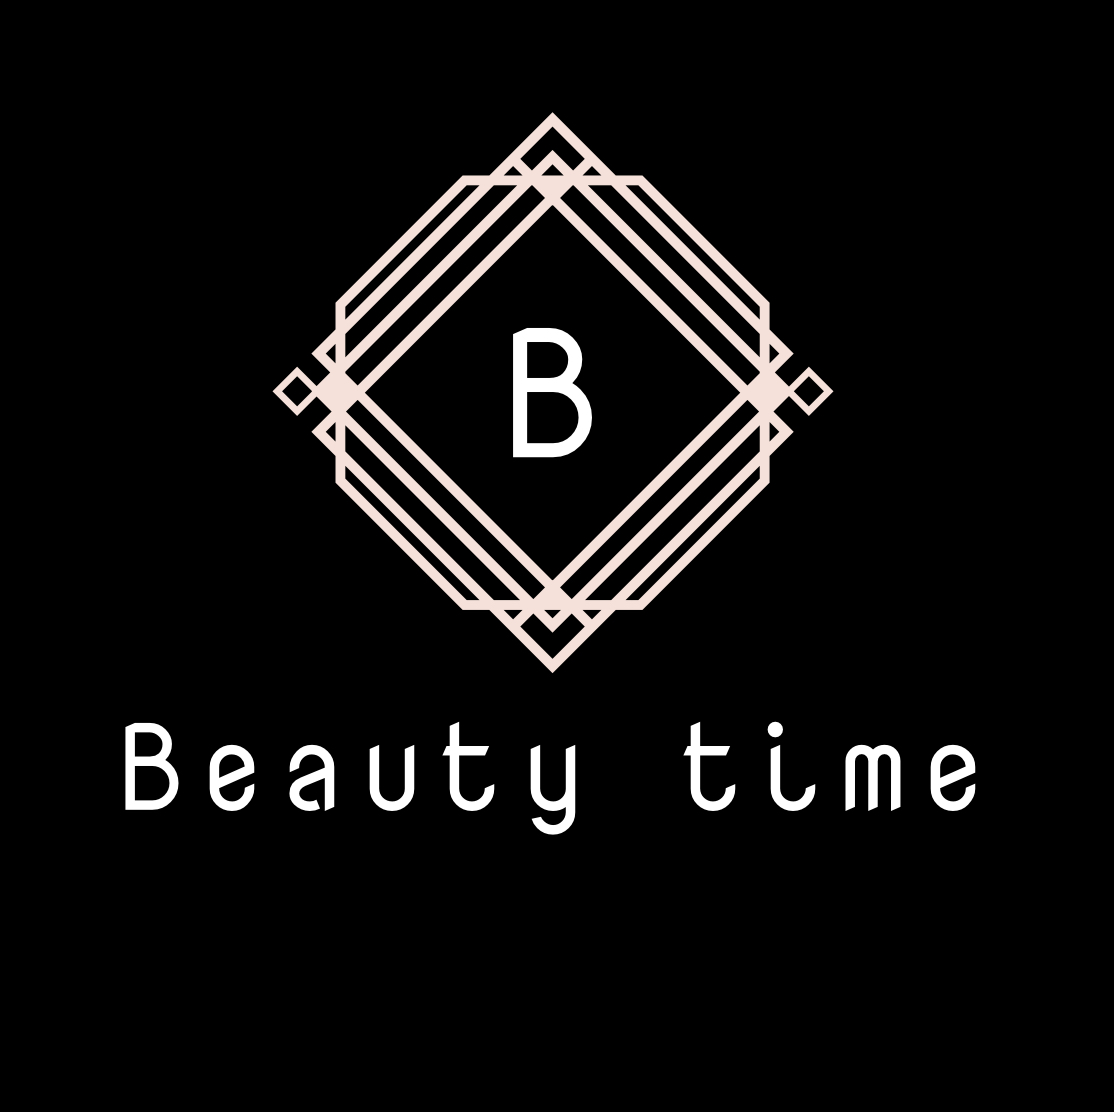 Time’s beauty